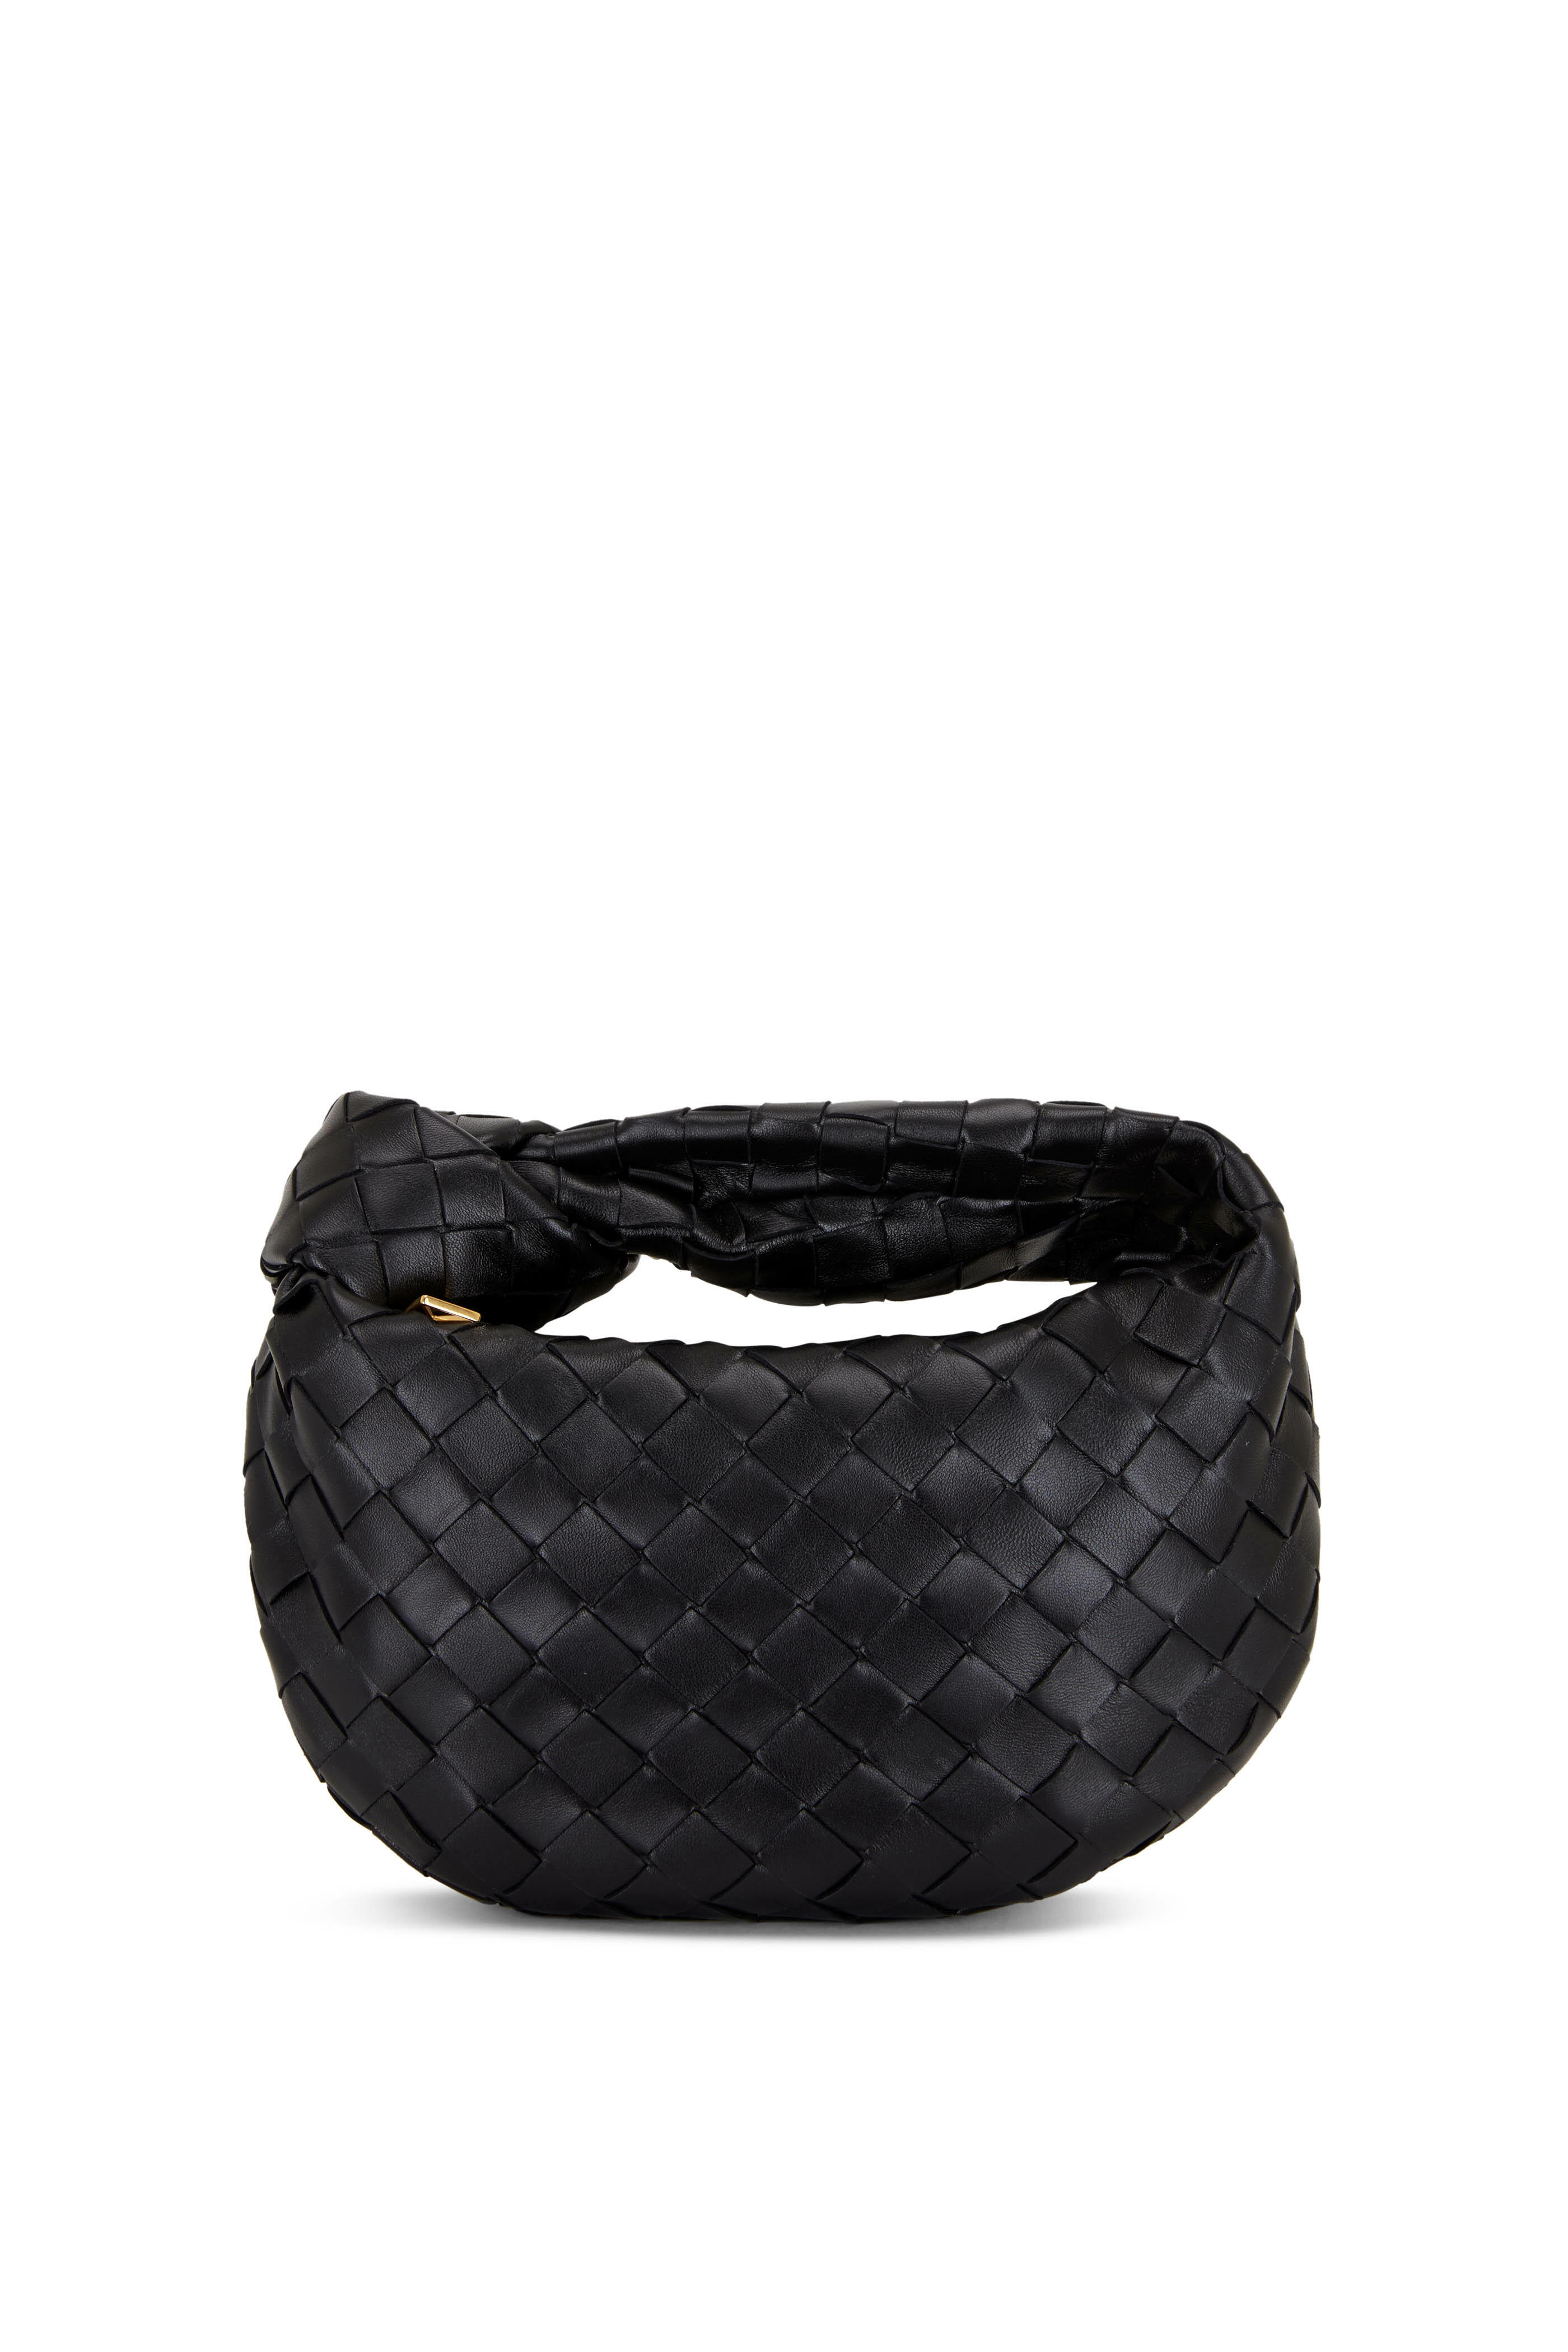 Bottega Veneta Black Python Intrecciato Napa Knot Clutch Bag RRP